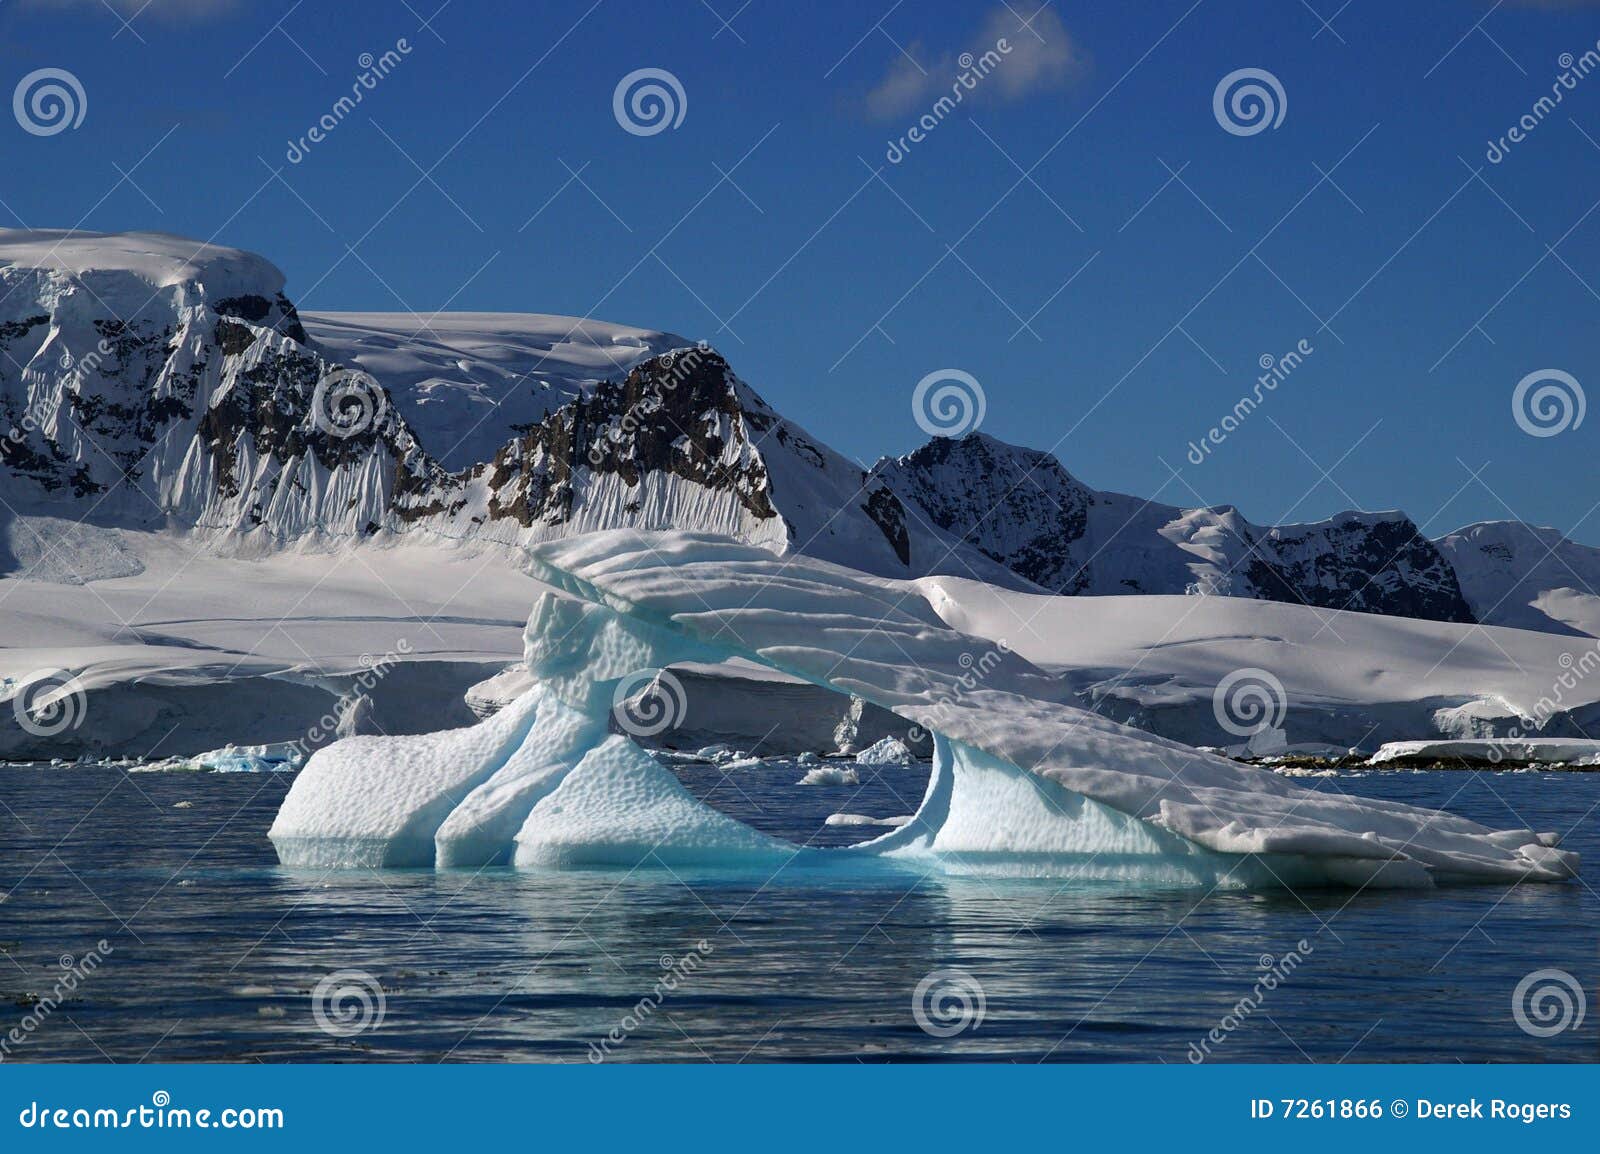 ice berg antarctica